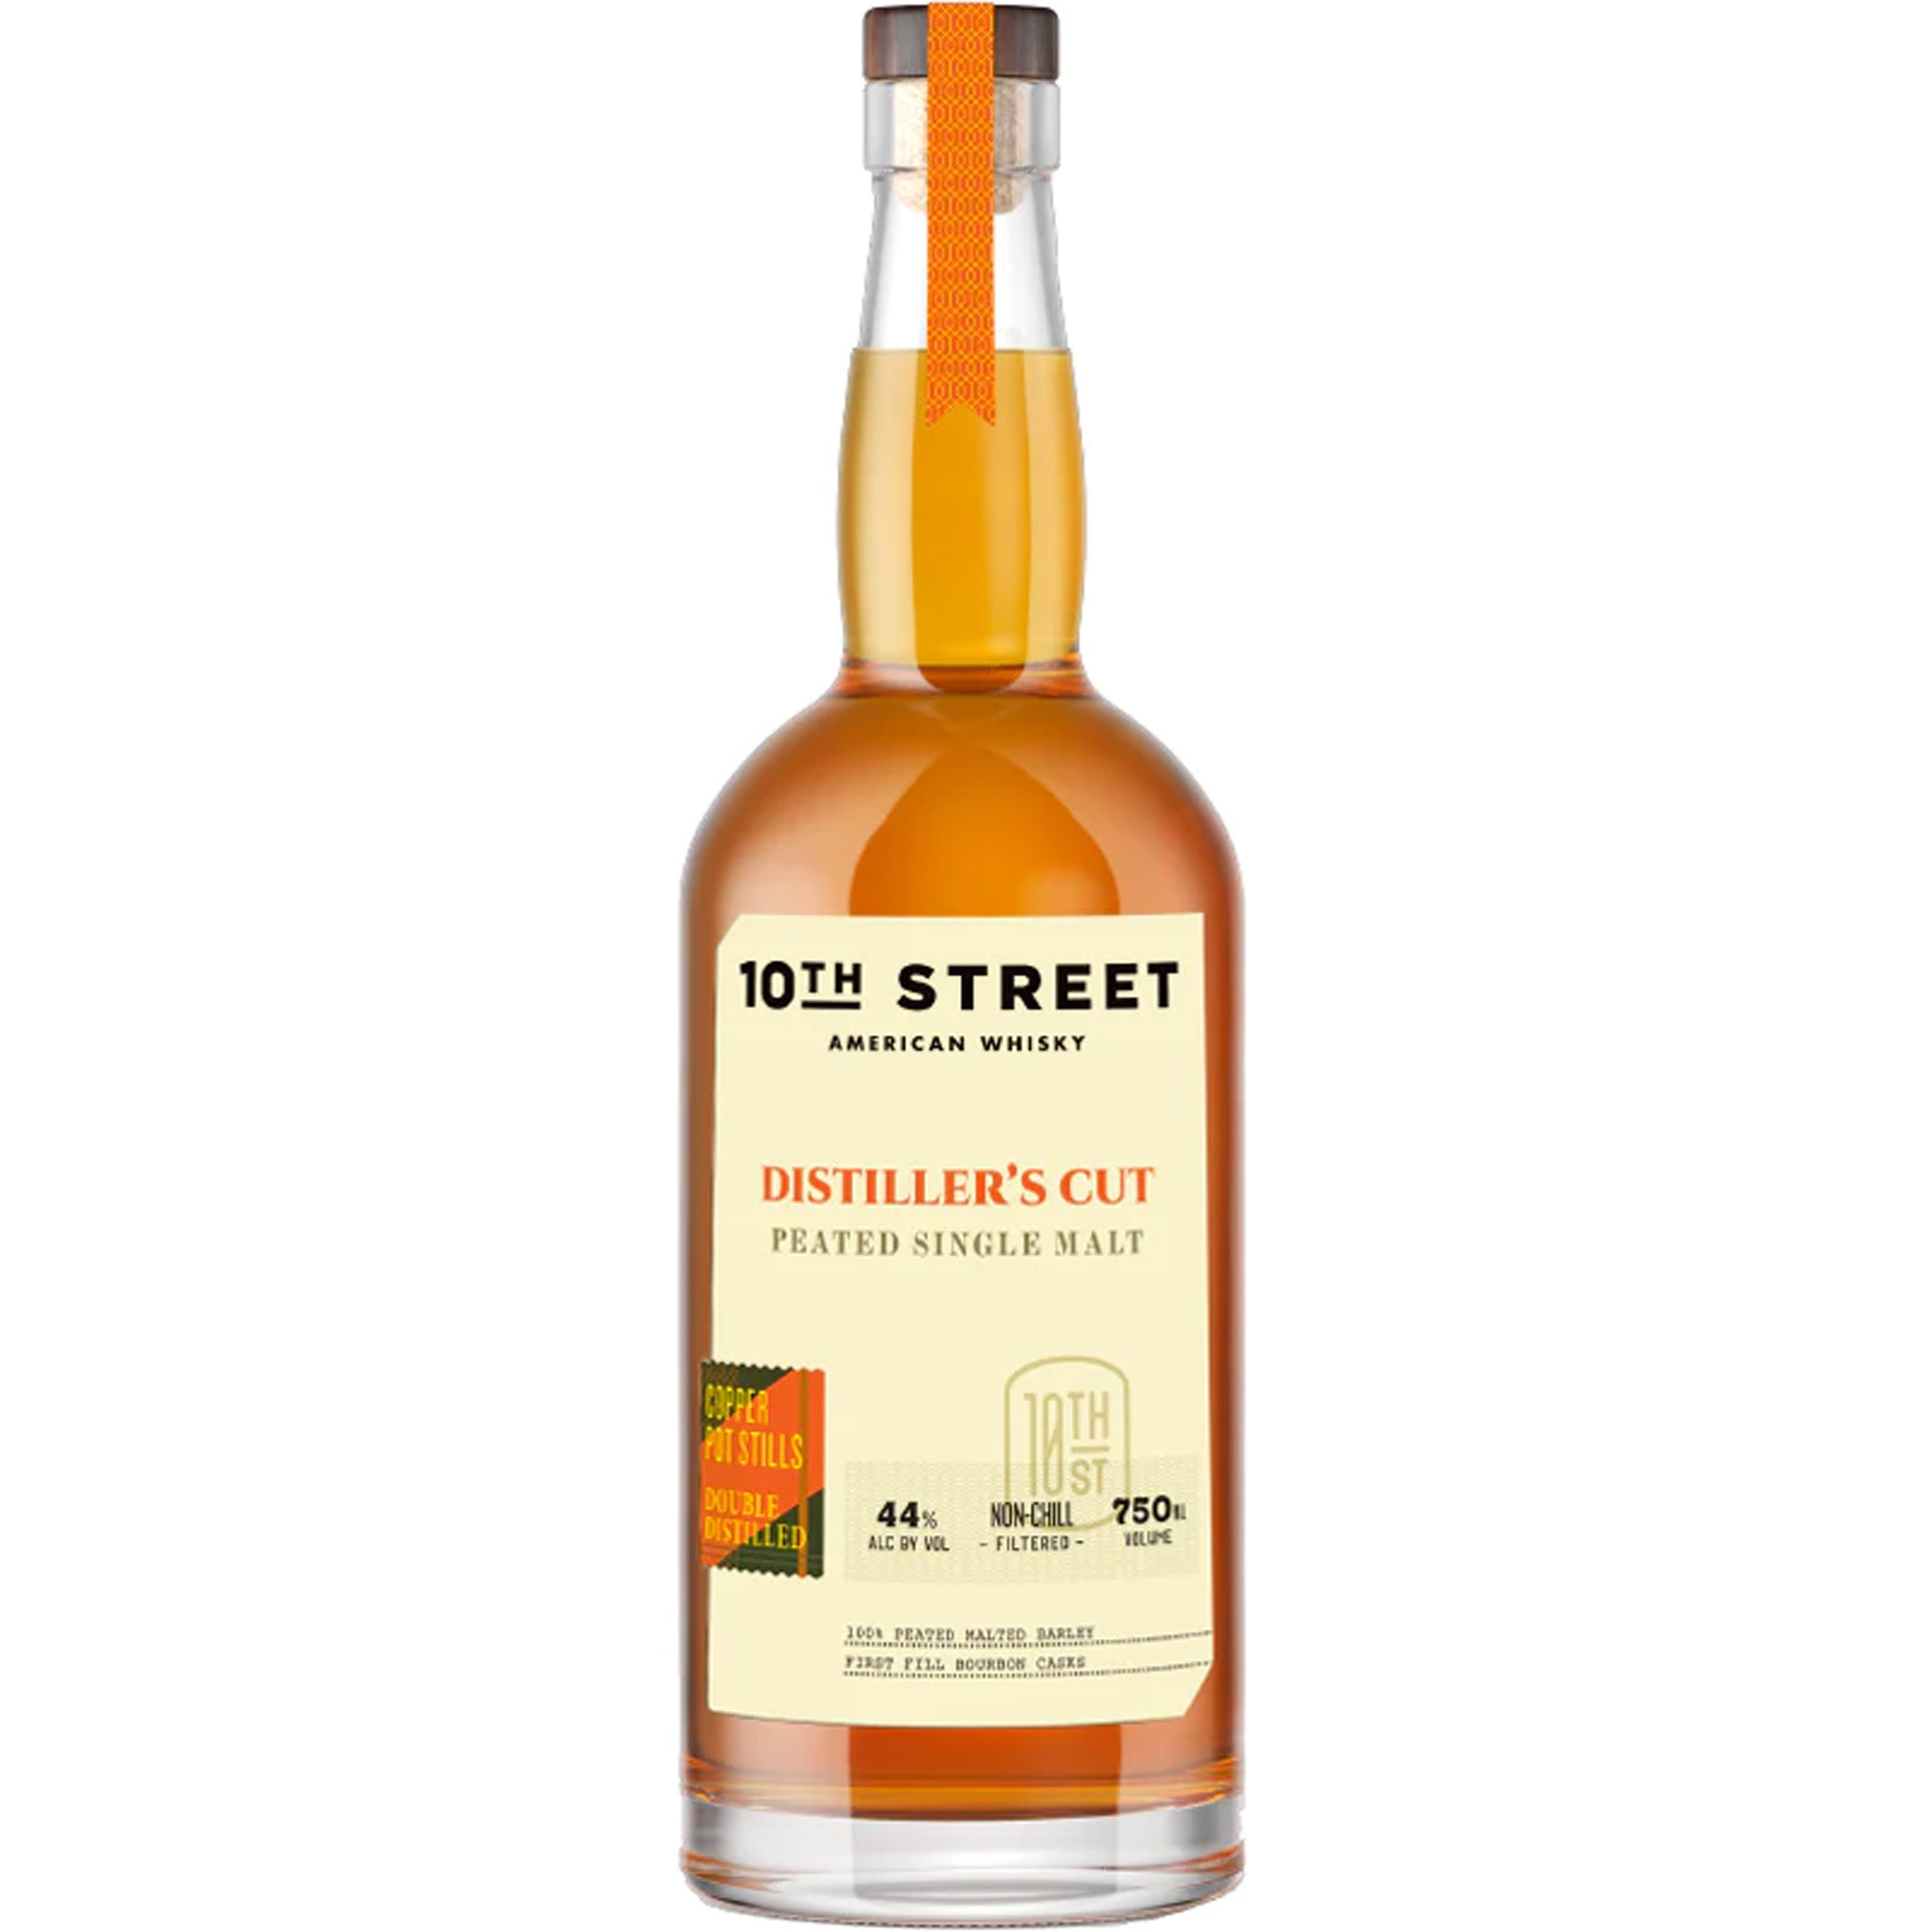 10th Street 'Distiller's Cut' Peated Single Malt American Whiskey